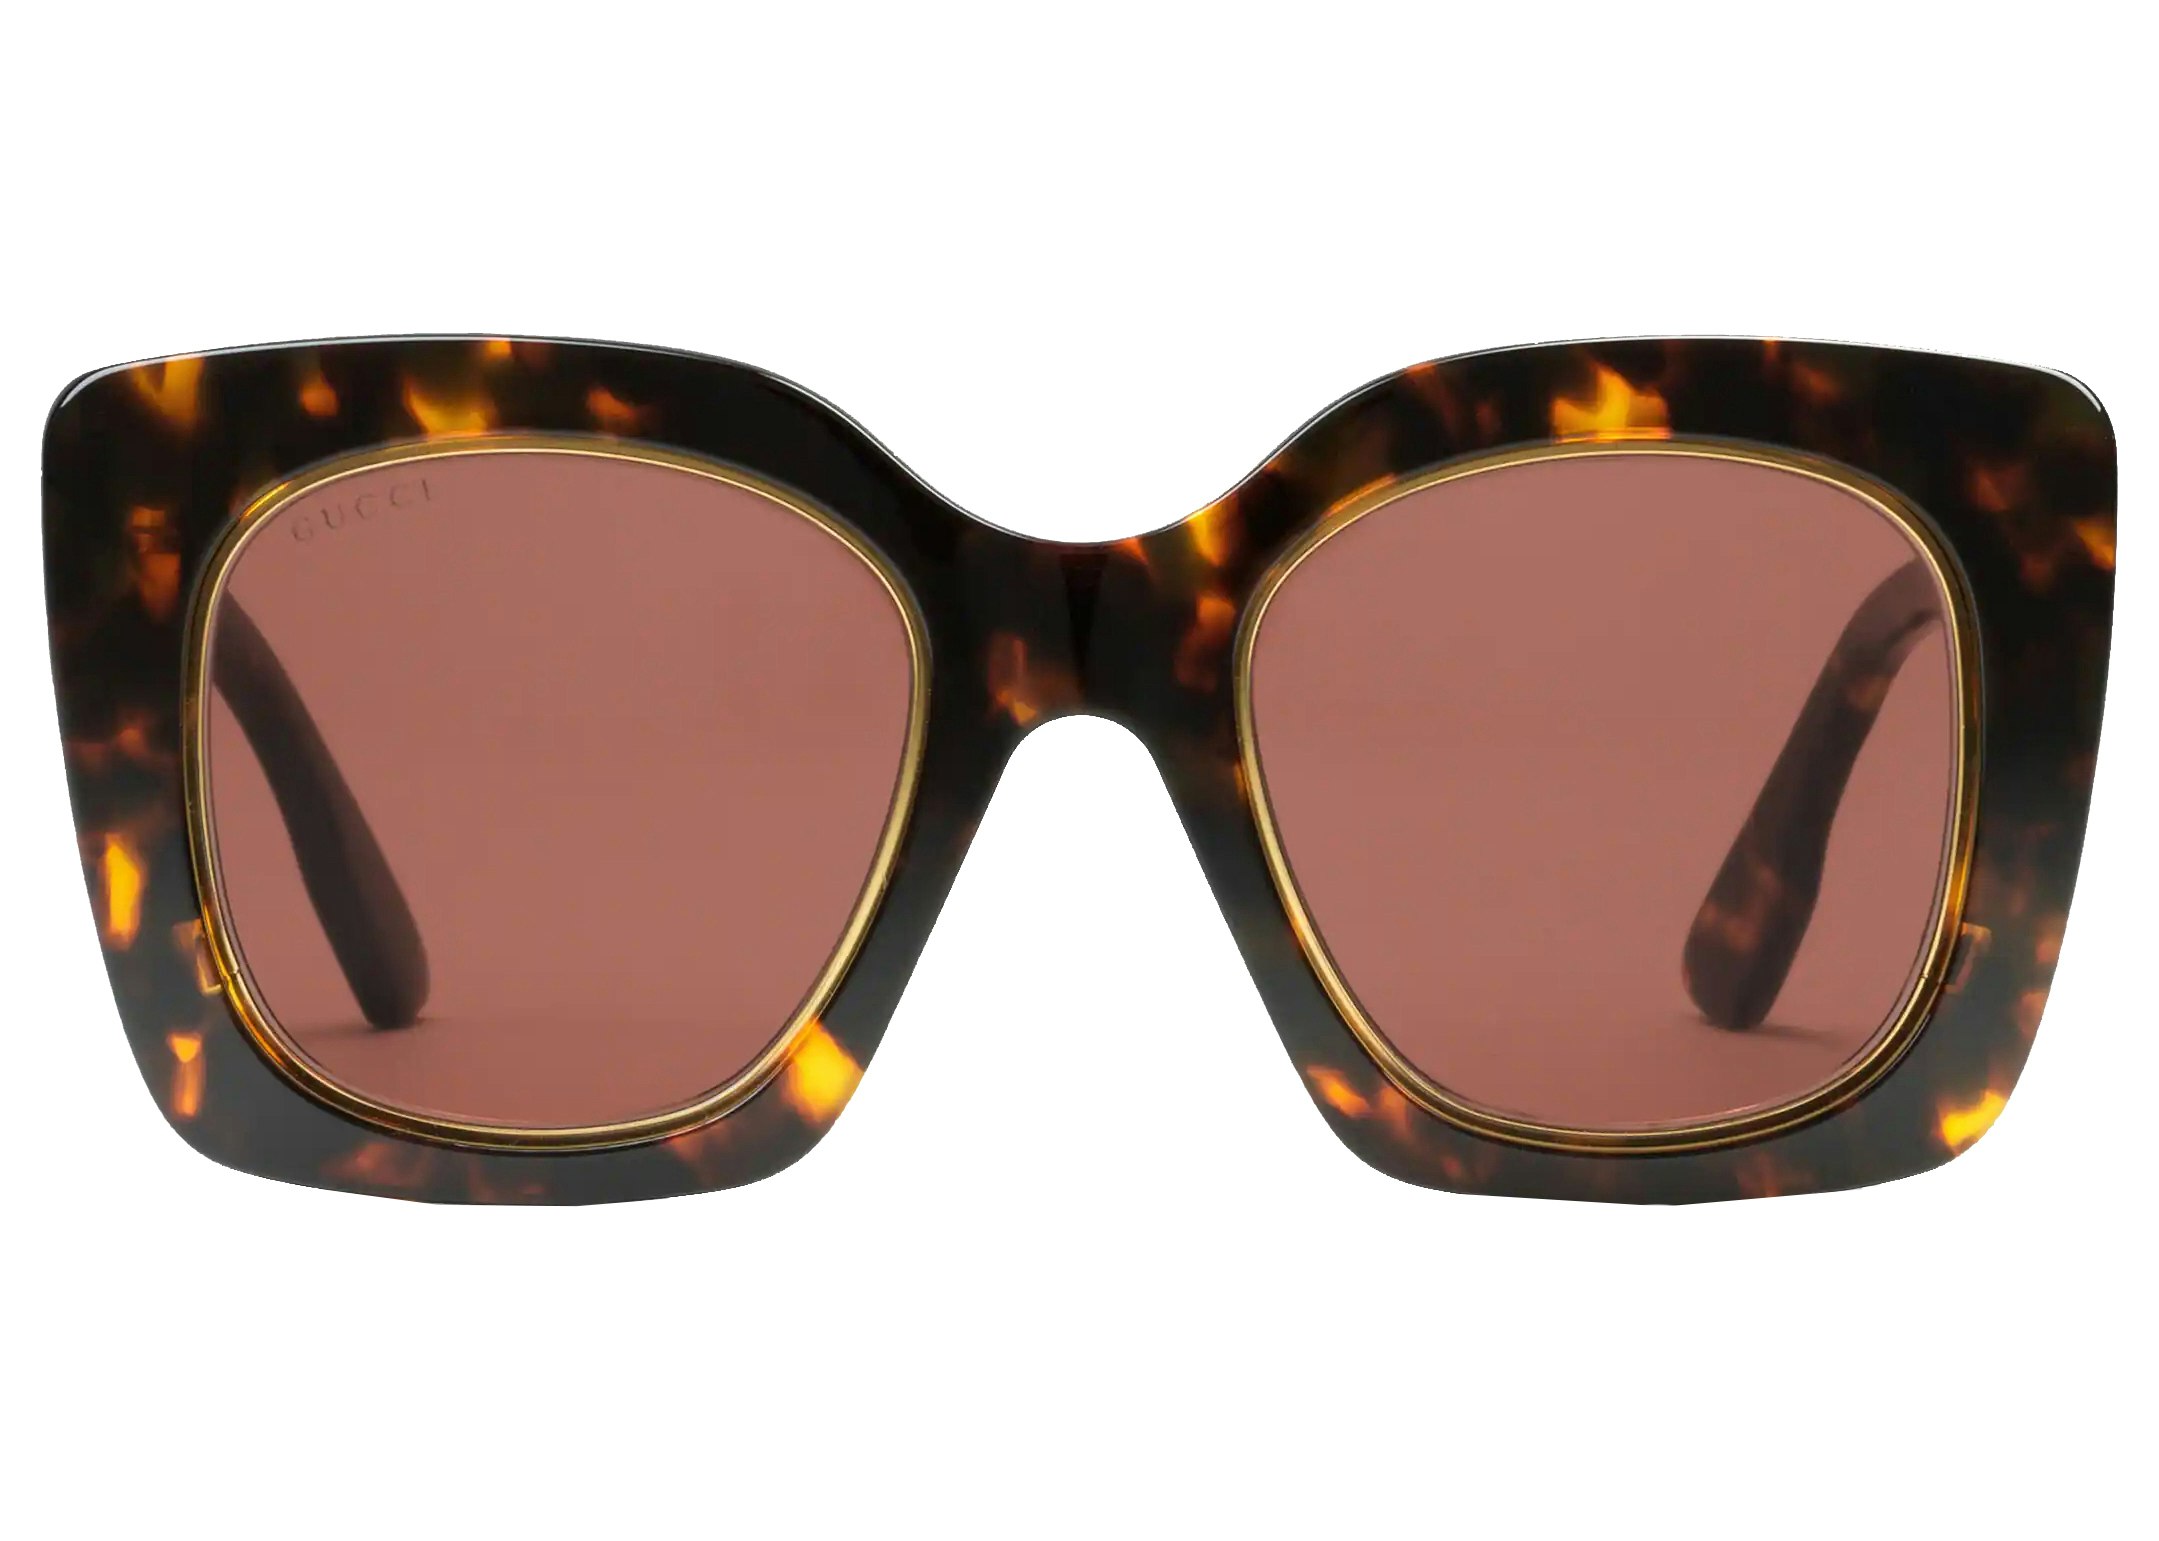 Gucci™ Eyewear | Sunglasses, Sunglasses women, Cute glasses frames